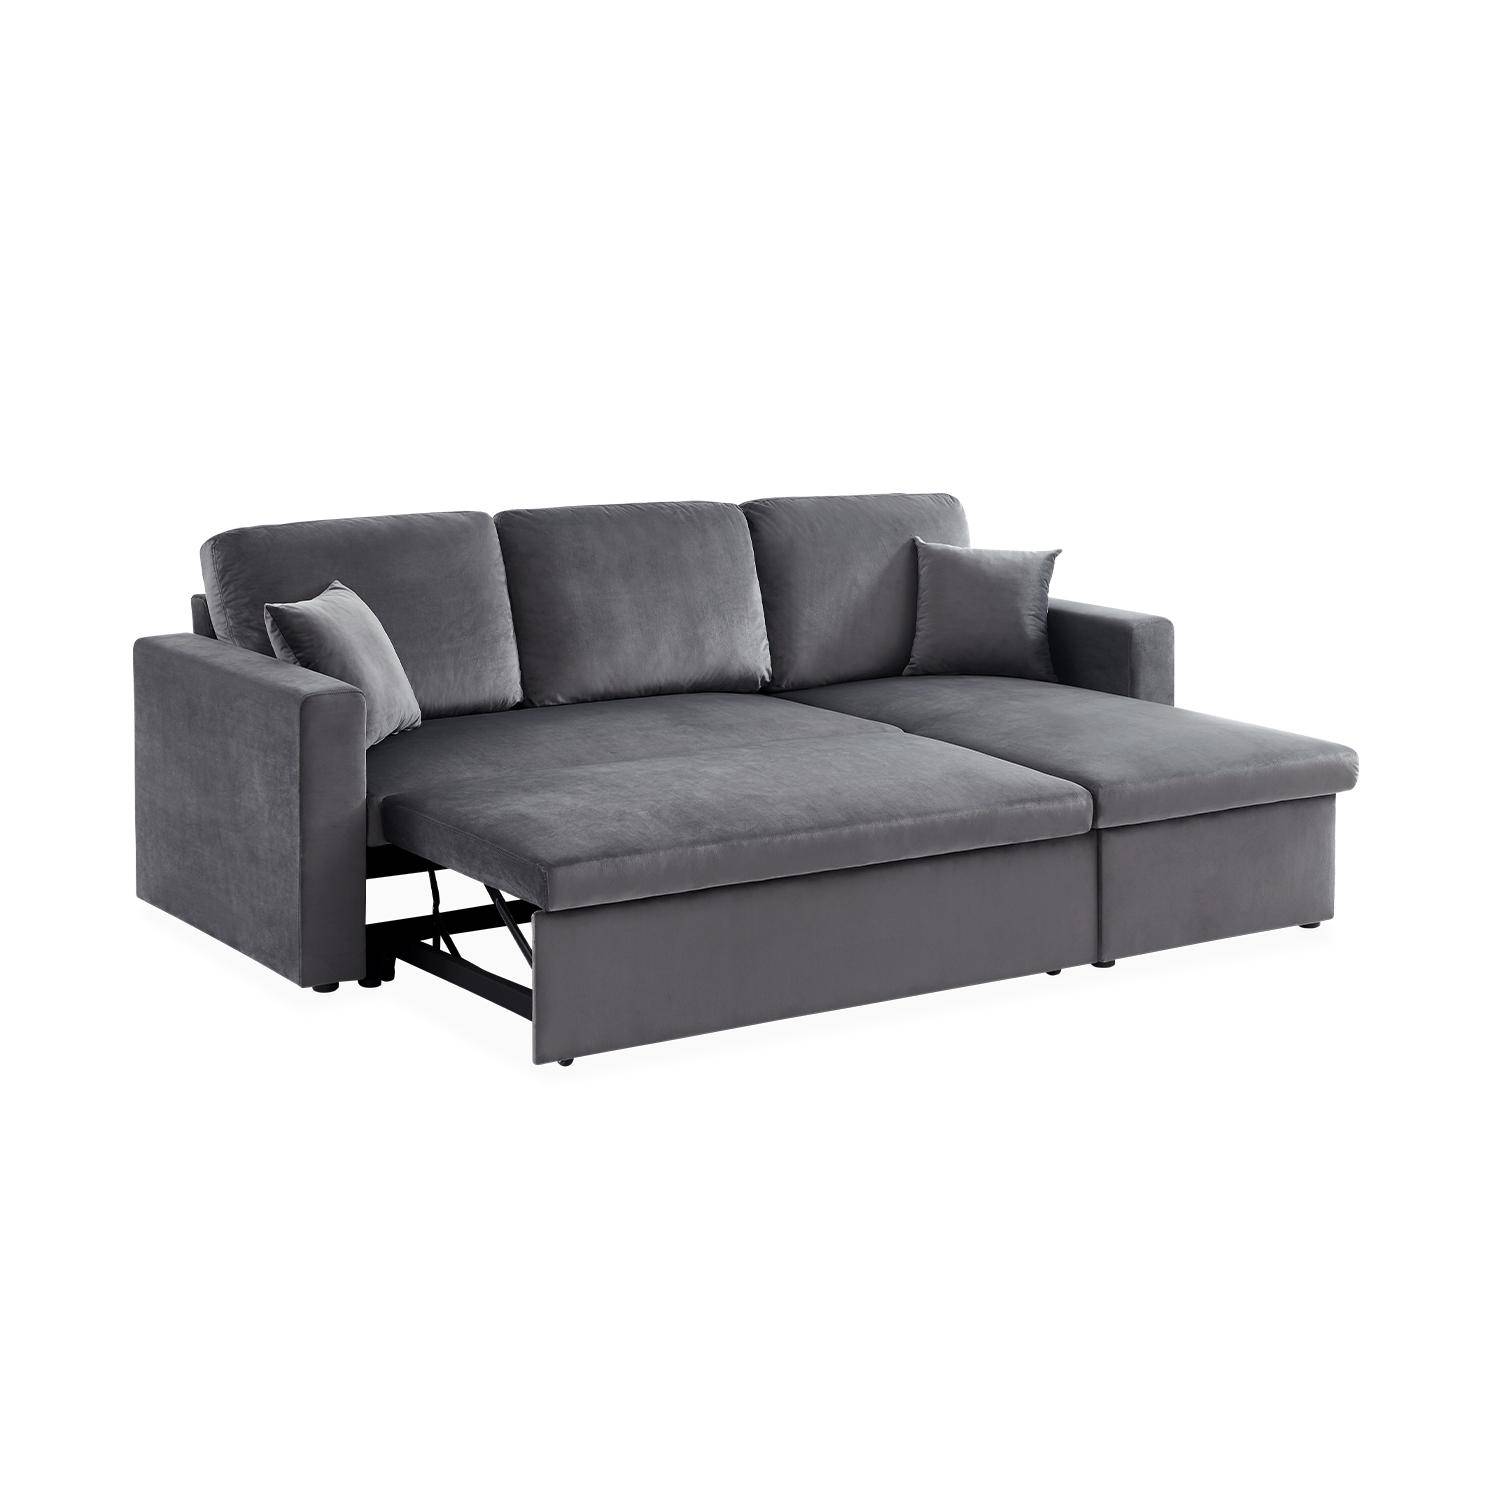 Dark grey velvet 3-seater convertible corner sofa, reversible corner armchair, storage box, modular bed Photo6